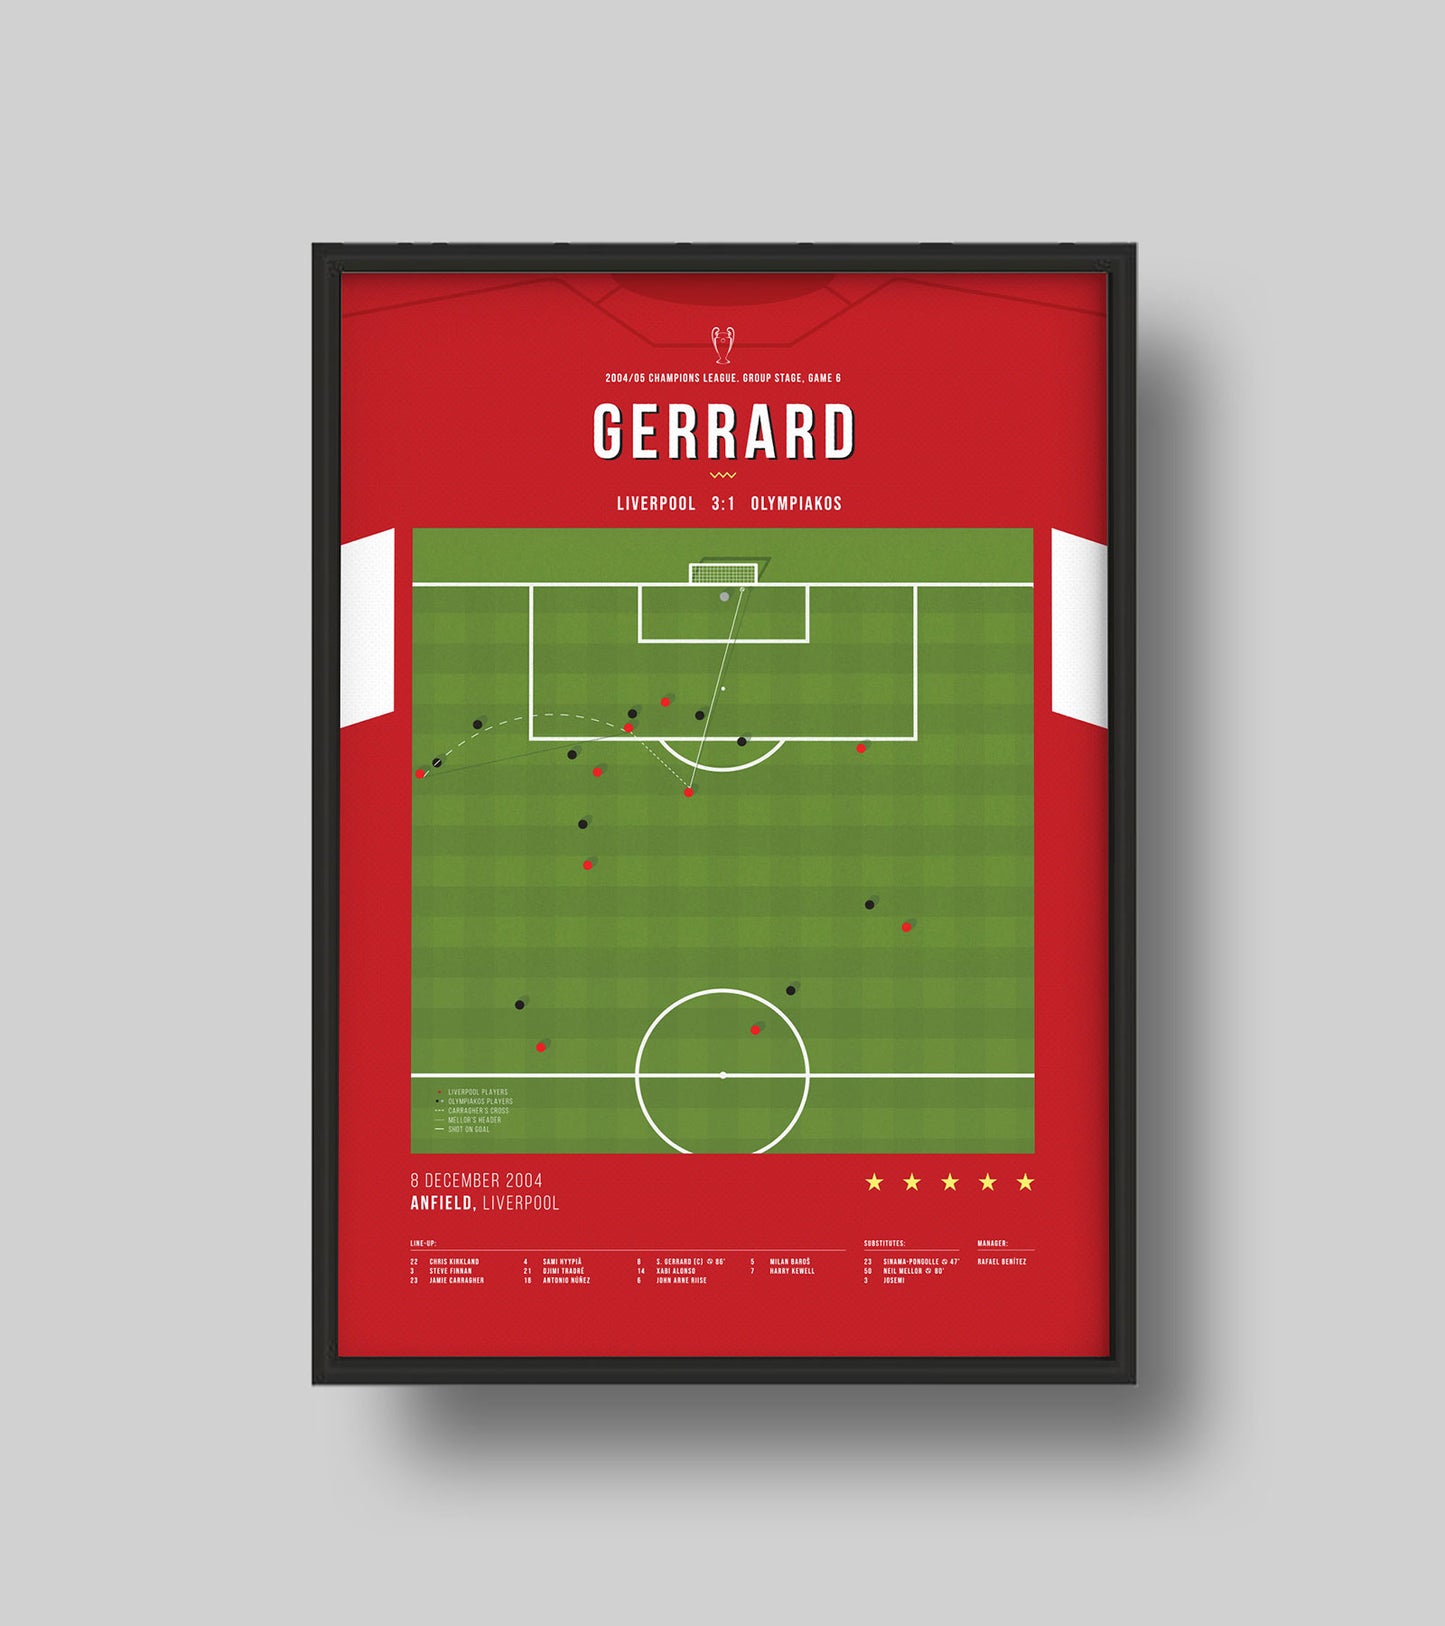 Steven Gerrard's most important Anfield goal